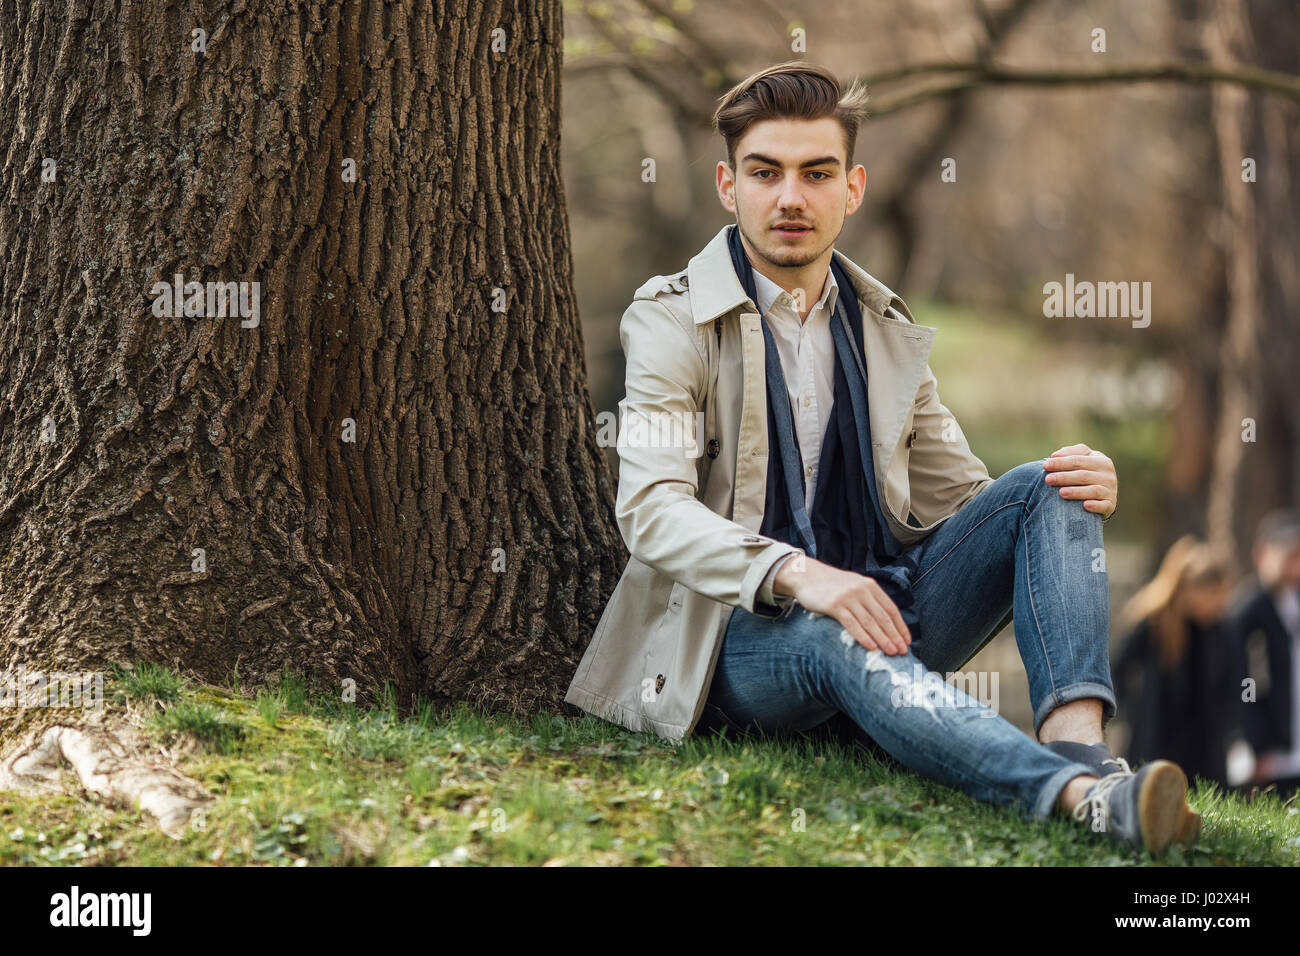 Fashionable man sitting near trees with blur background Stock Photo - Alamy